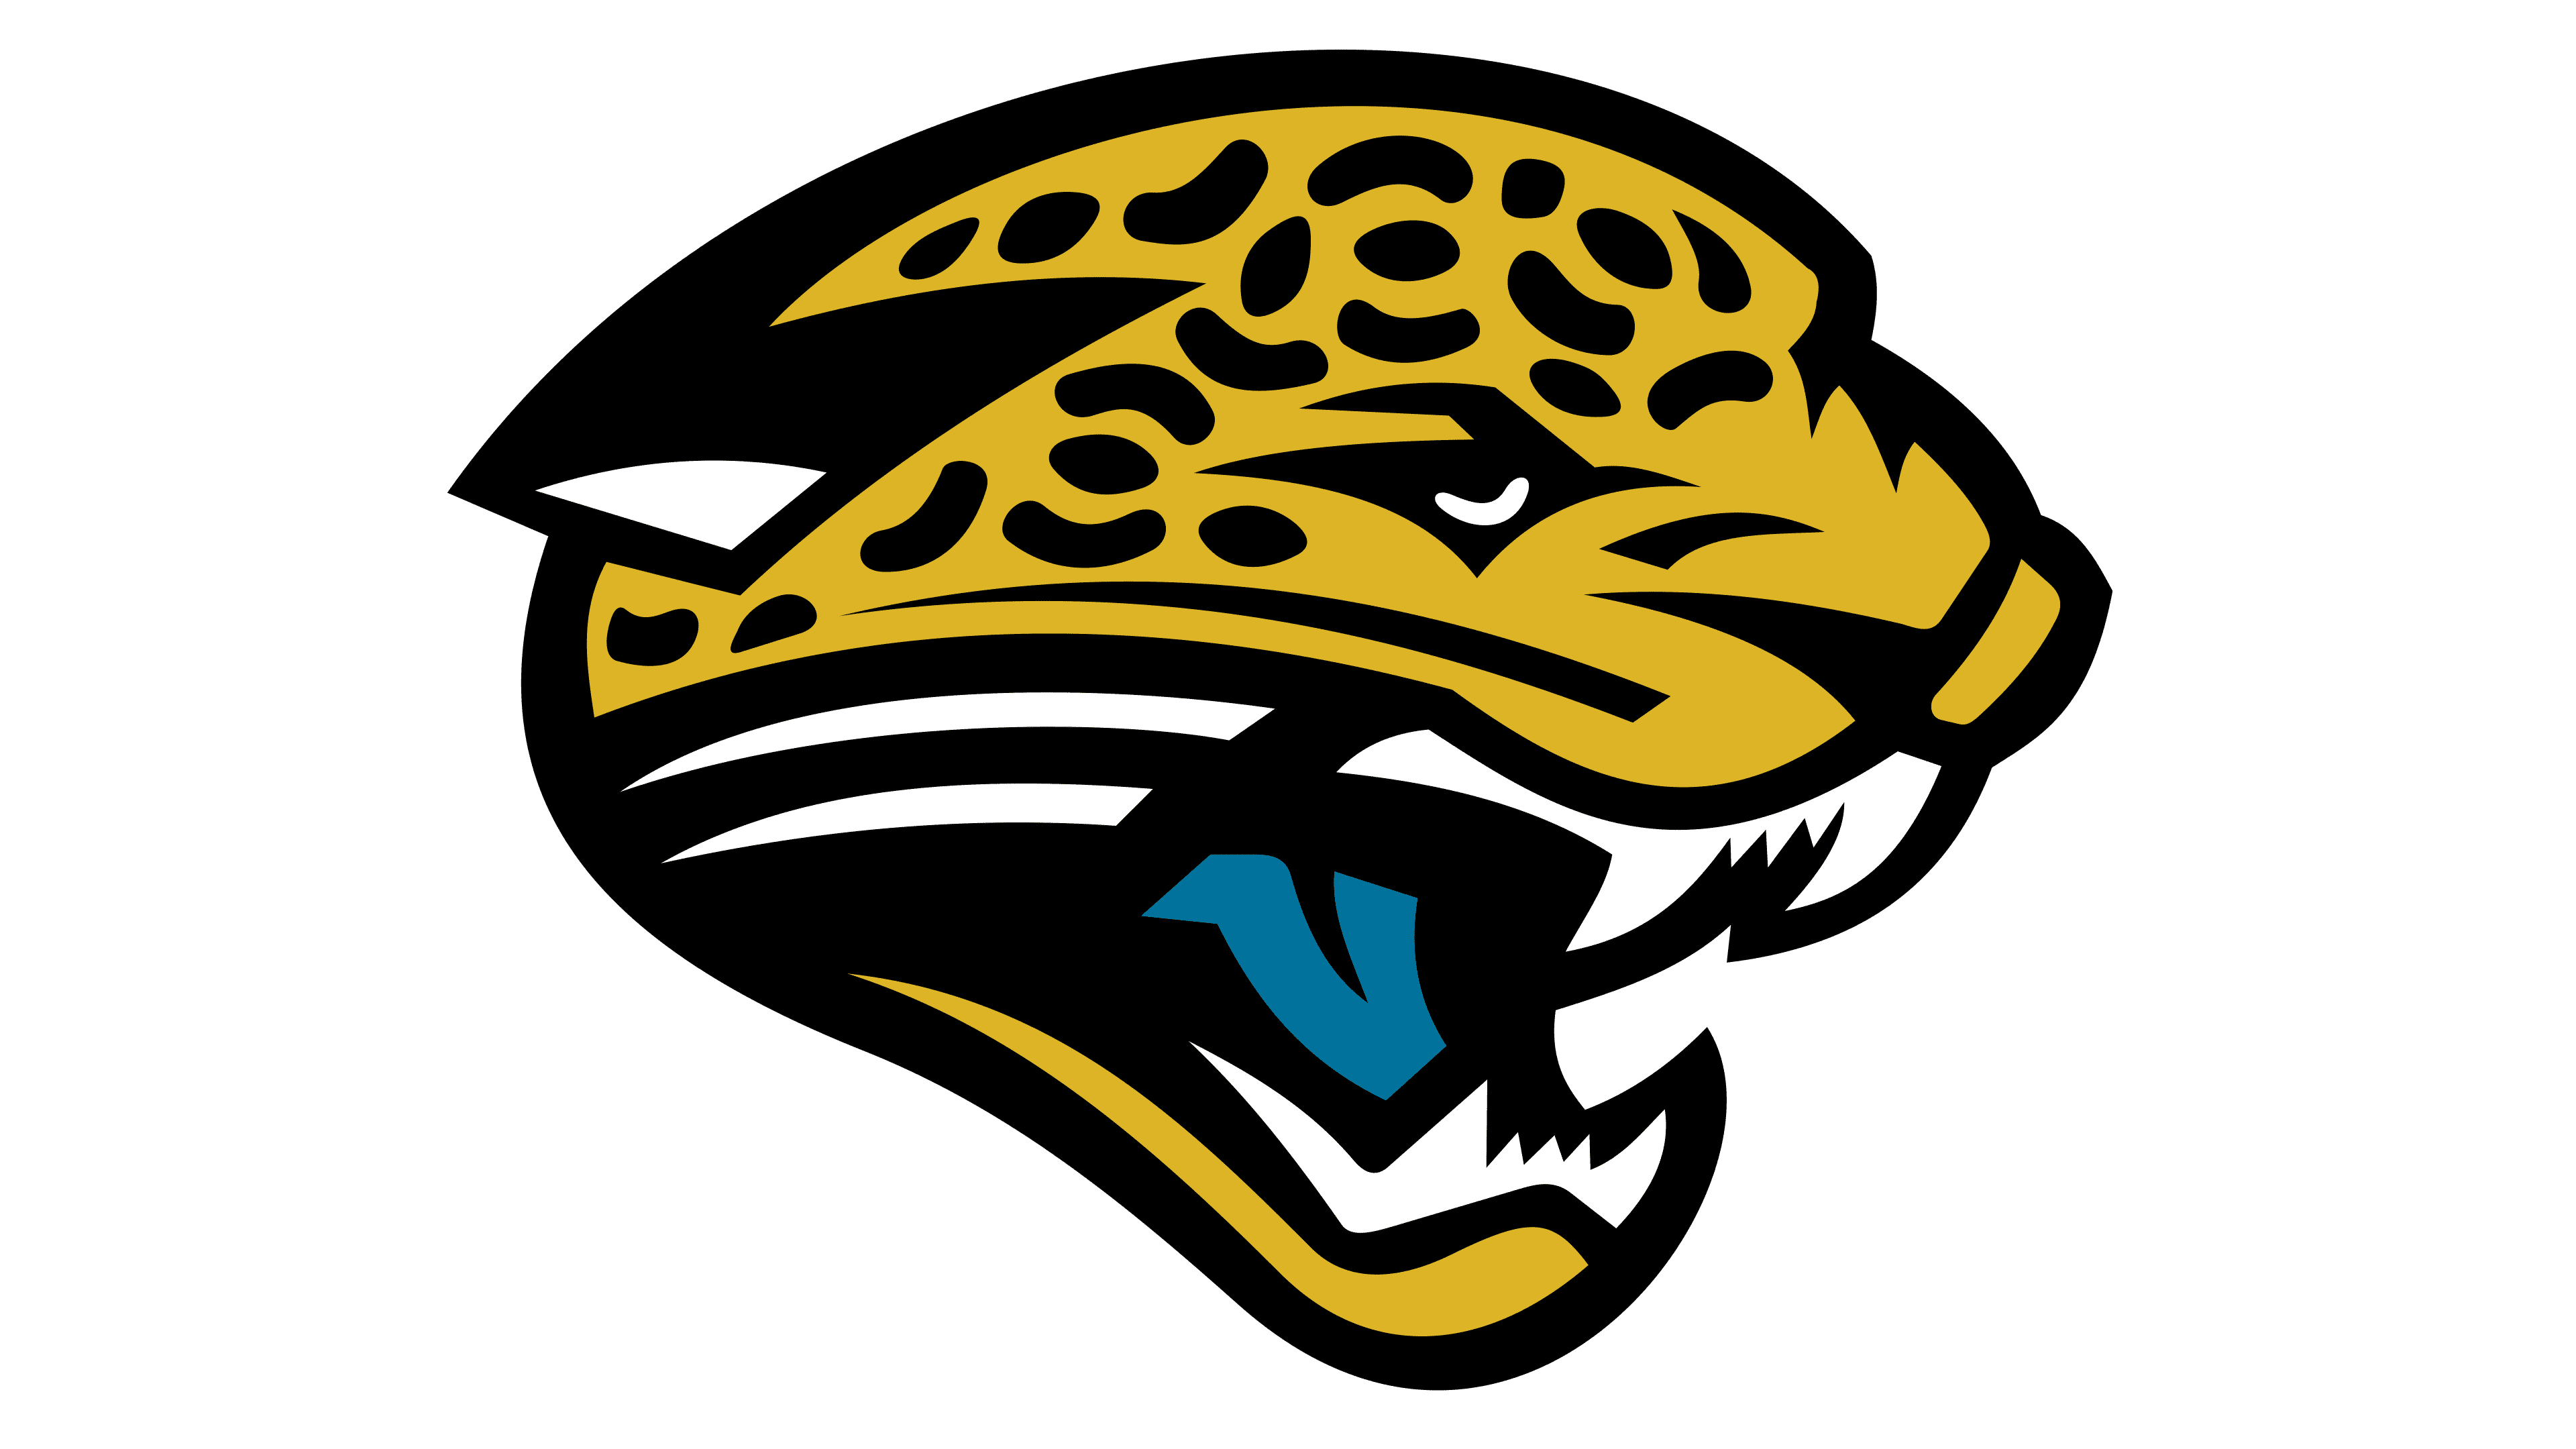 South Alabama Jaguars Logo And Symbol Meaning History - vrogue.co